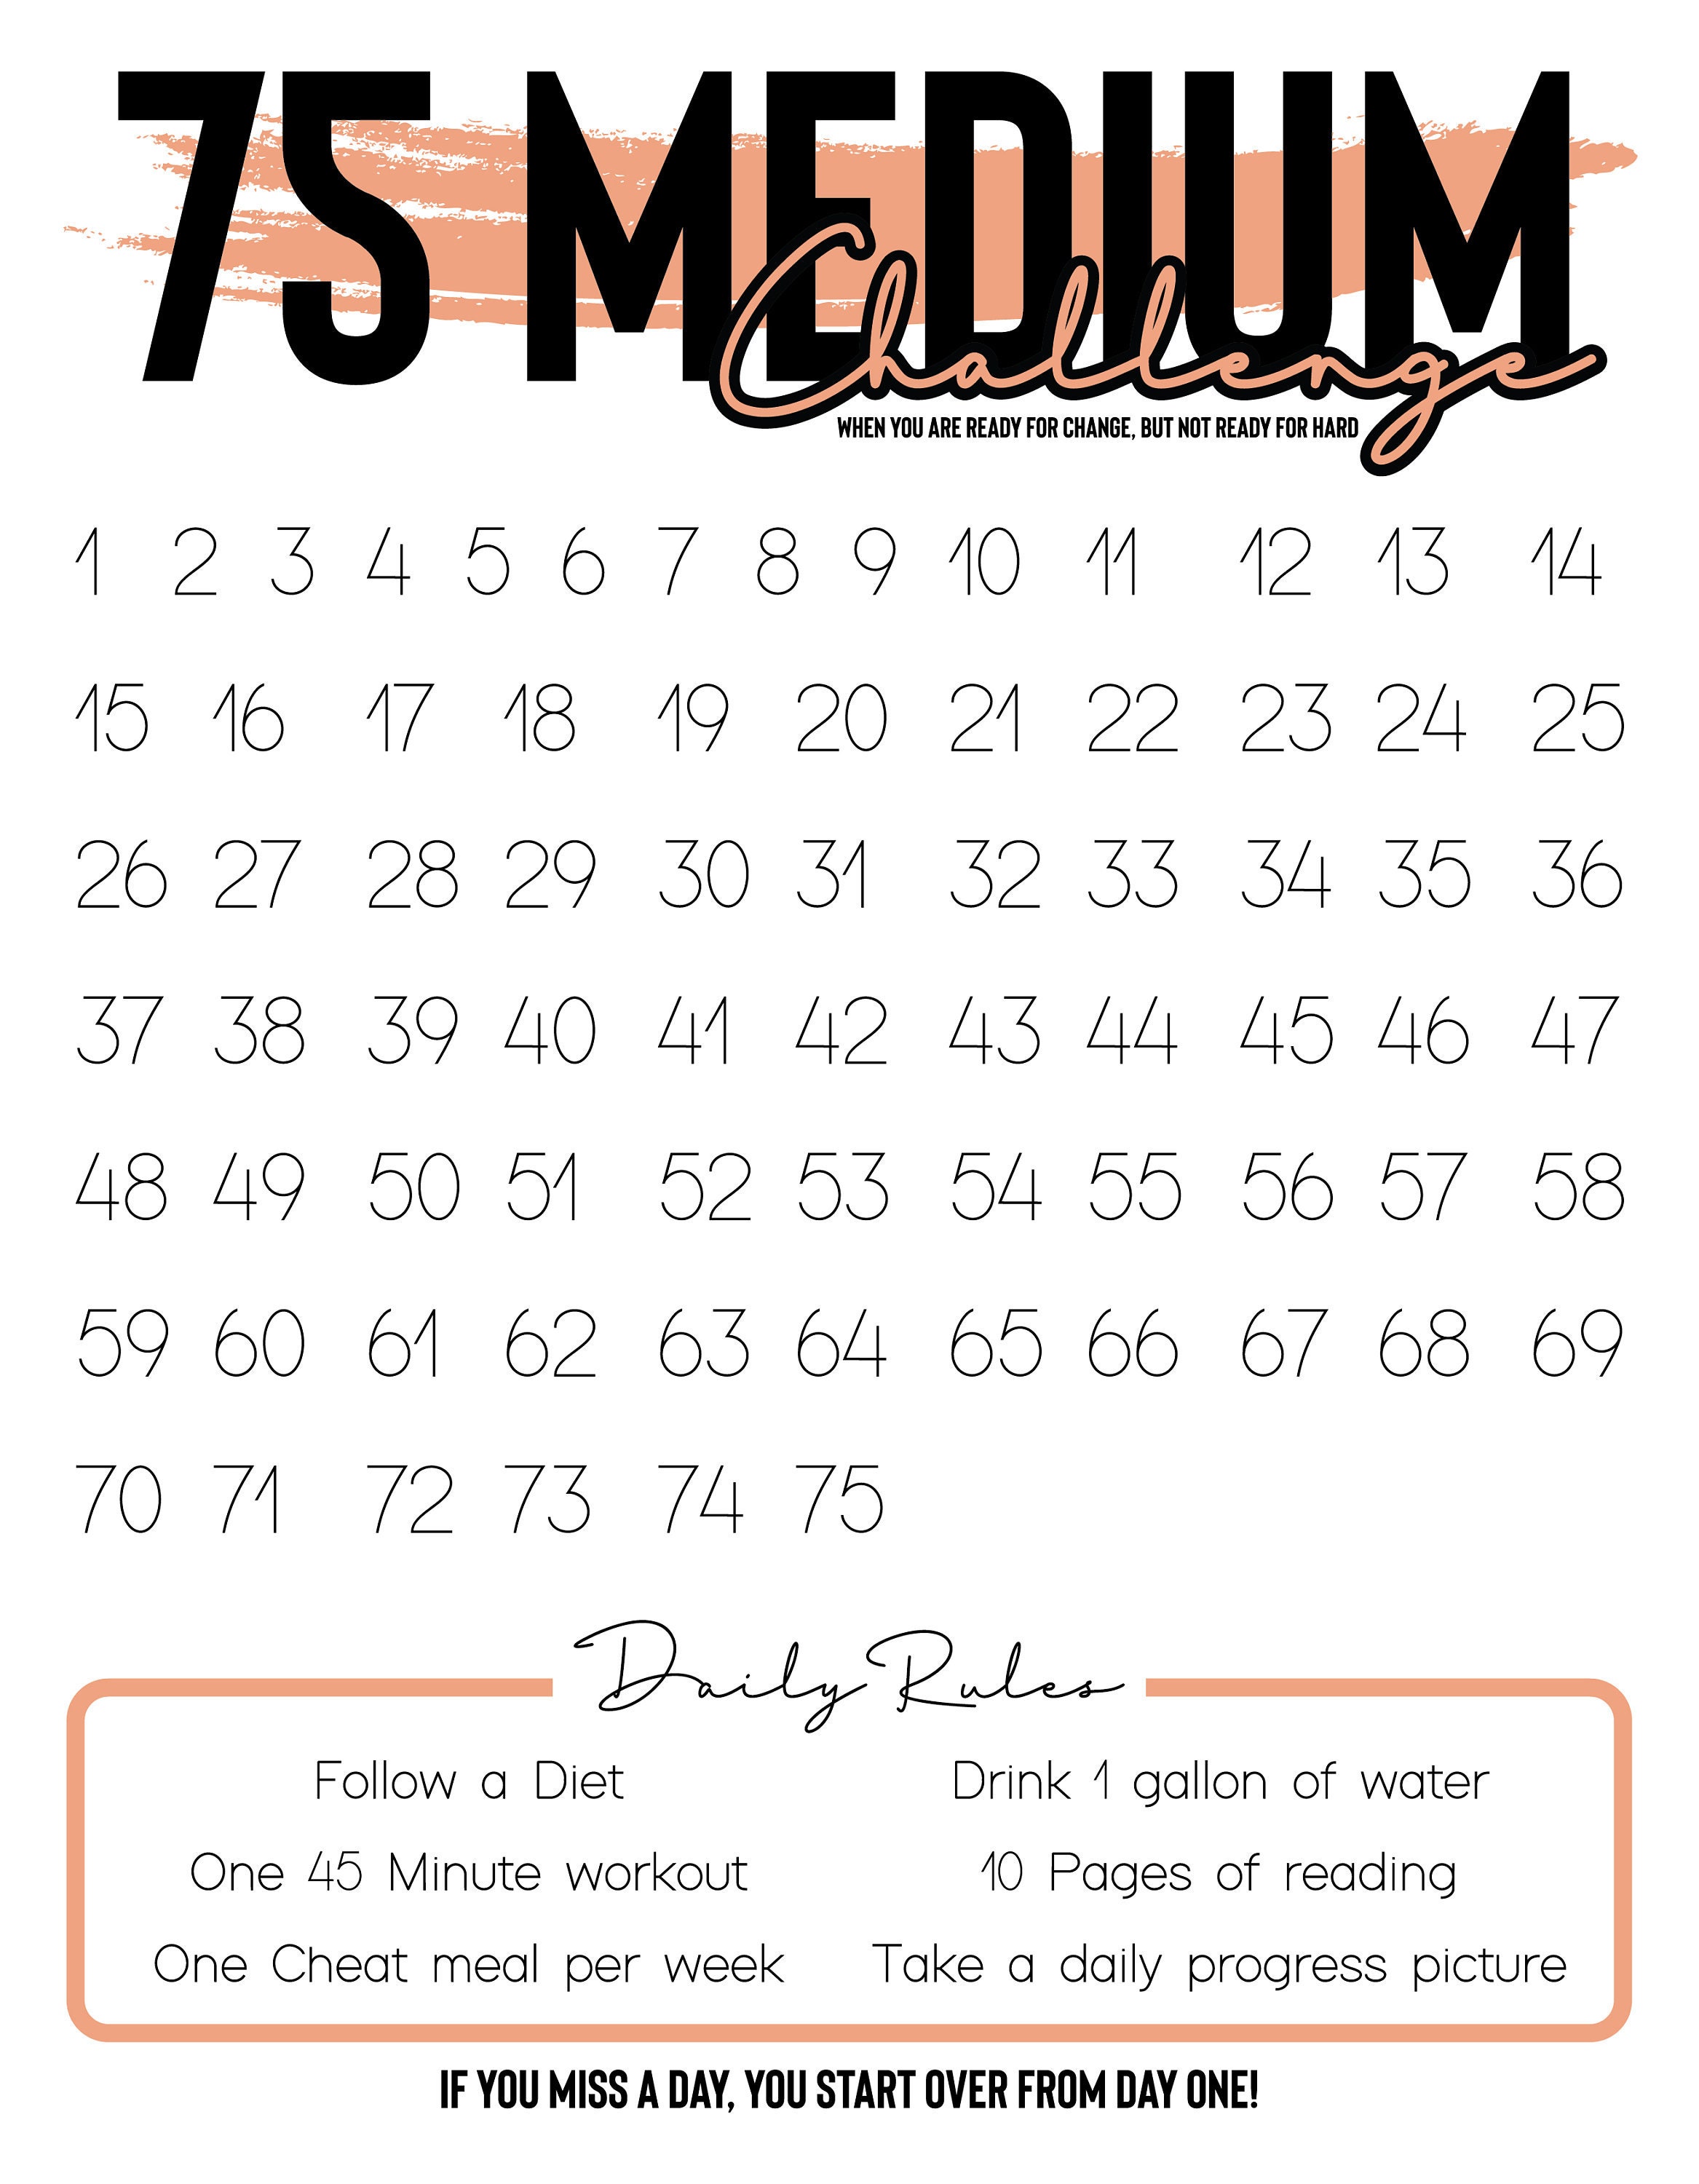 75-medium-challenge-tracker-orange-digital-file-only-etsy